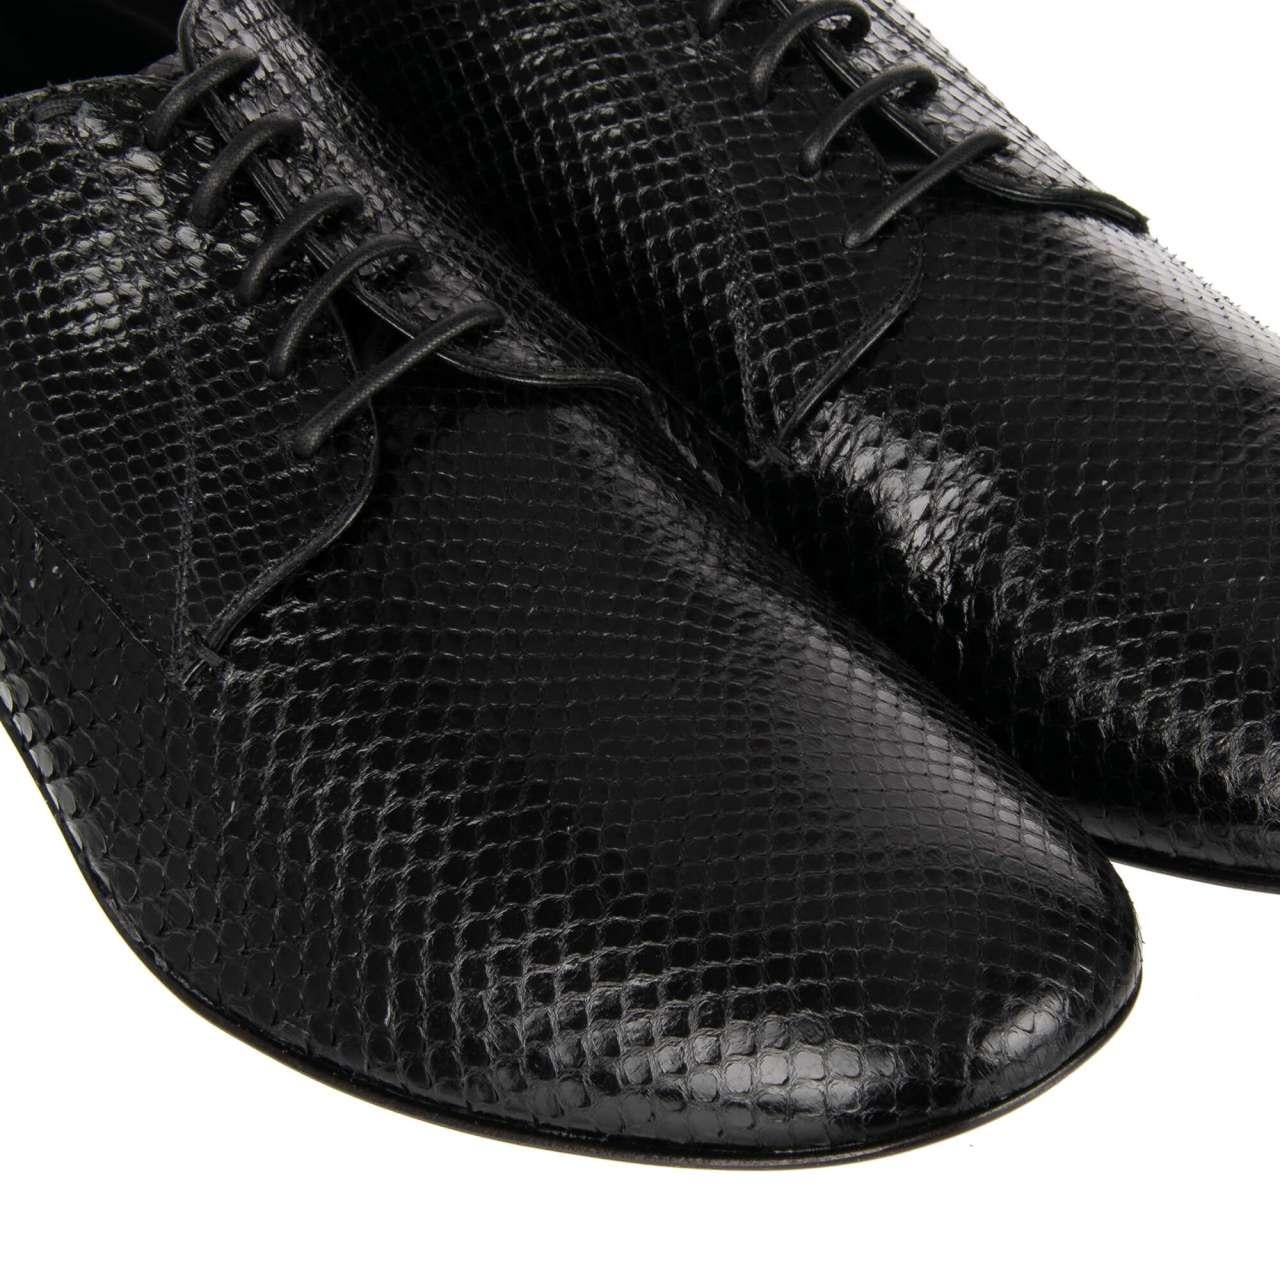 Dolce & Gabbana - Snake Derby Shoes OTELLO Black 44 UK 10 US 11 For Sale 1